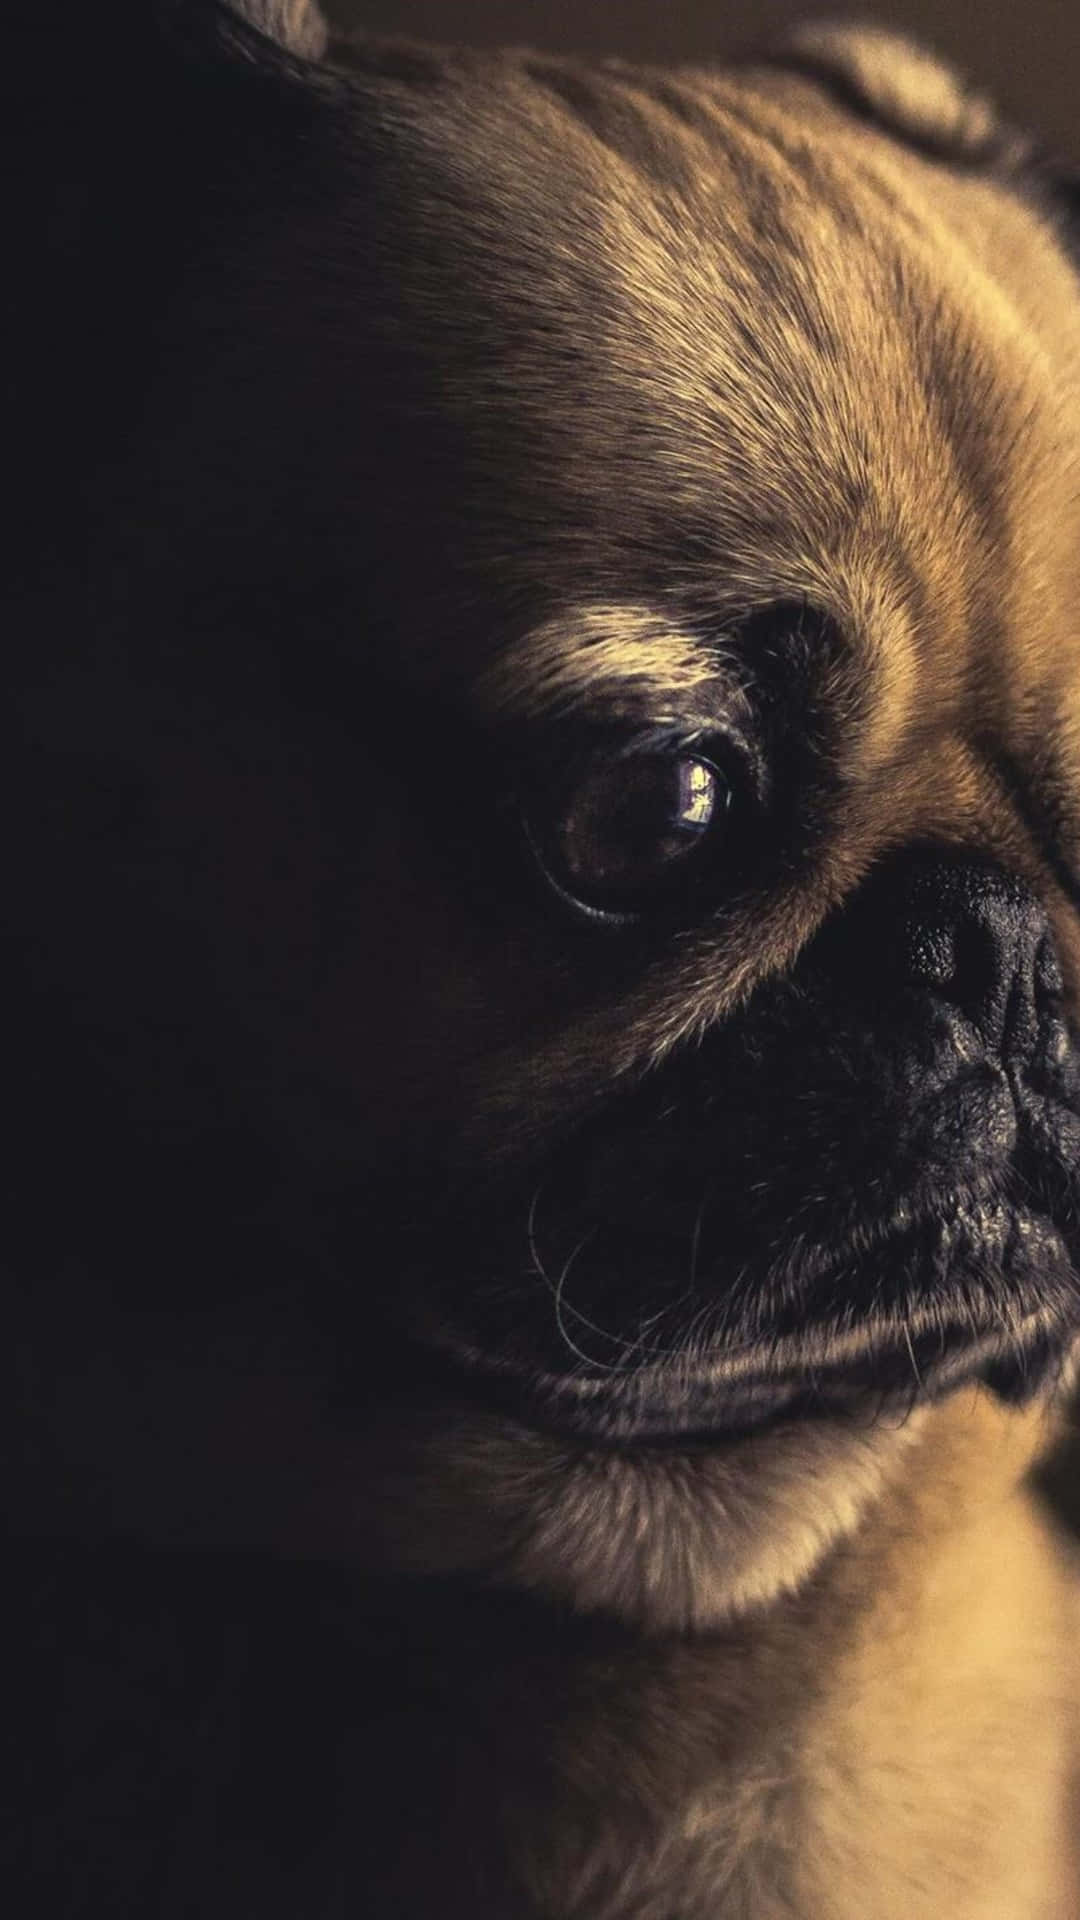 A cute pug dog gazing up towards the camera Wallpaper